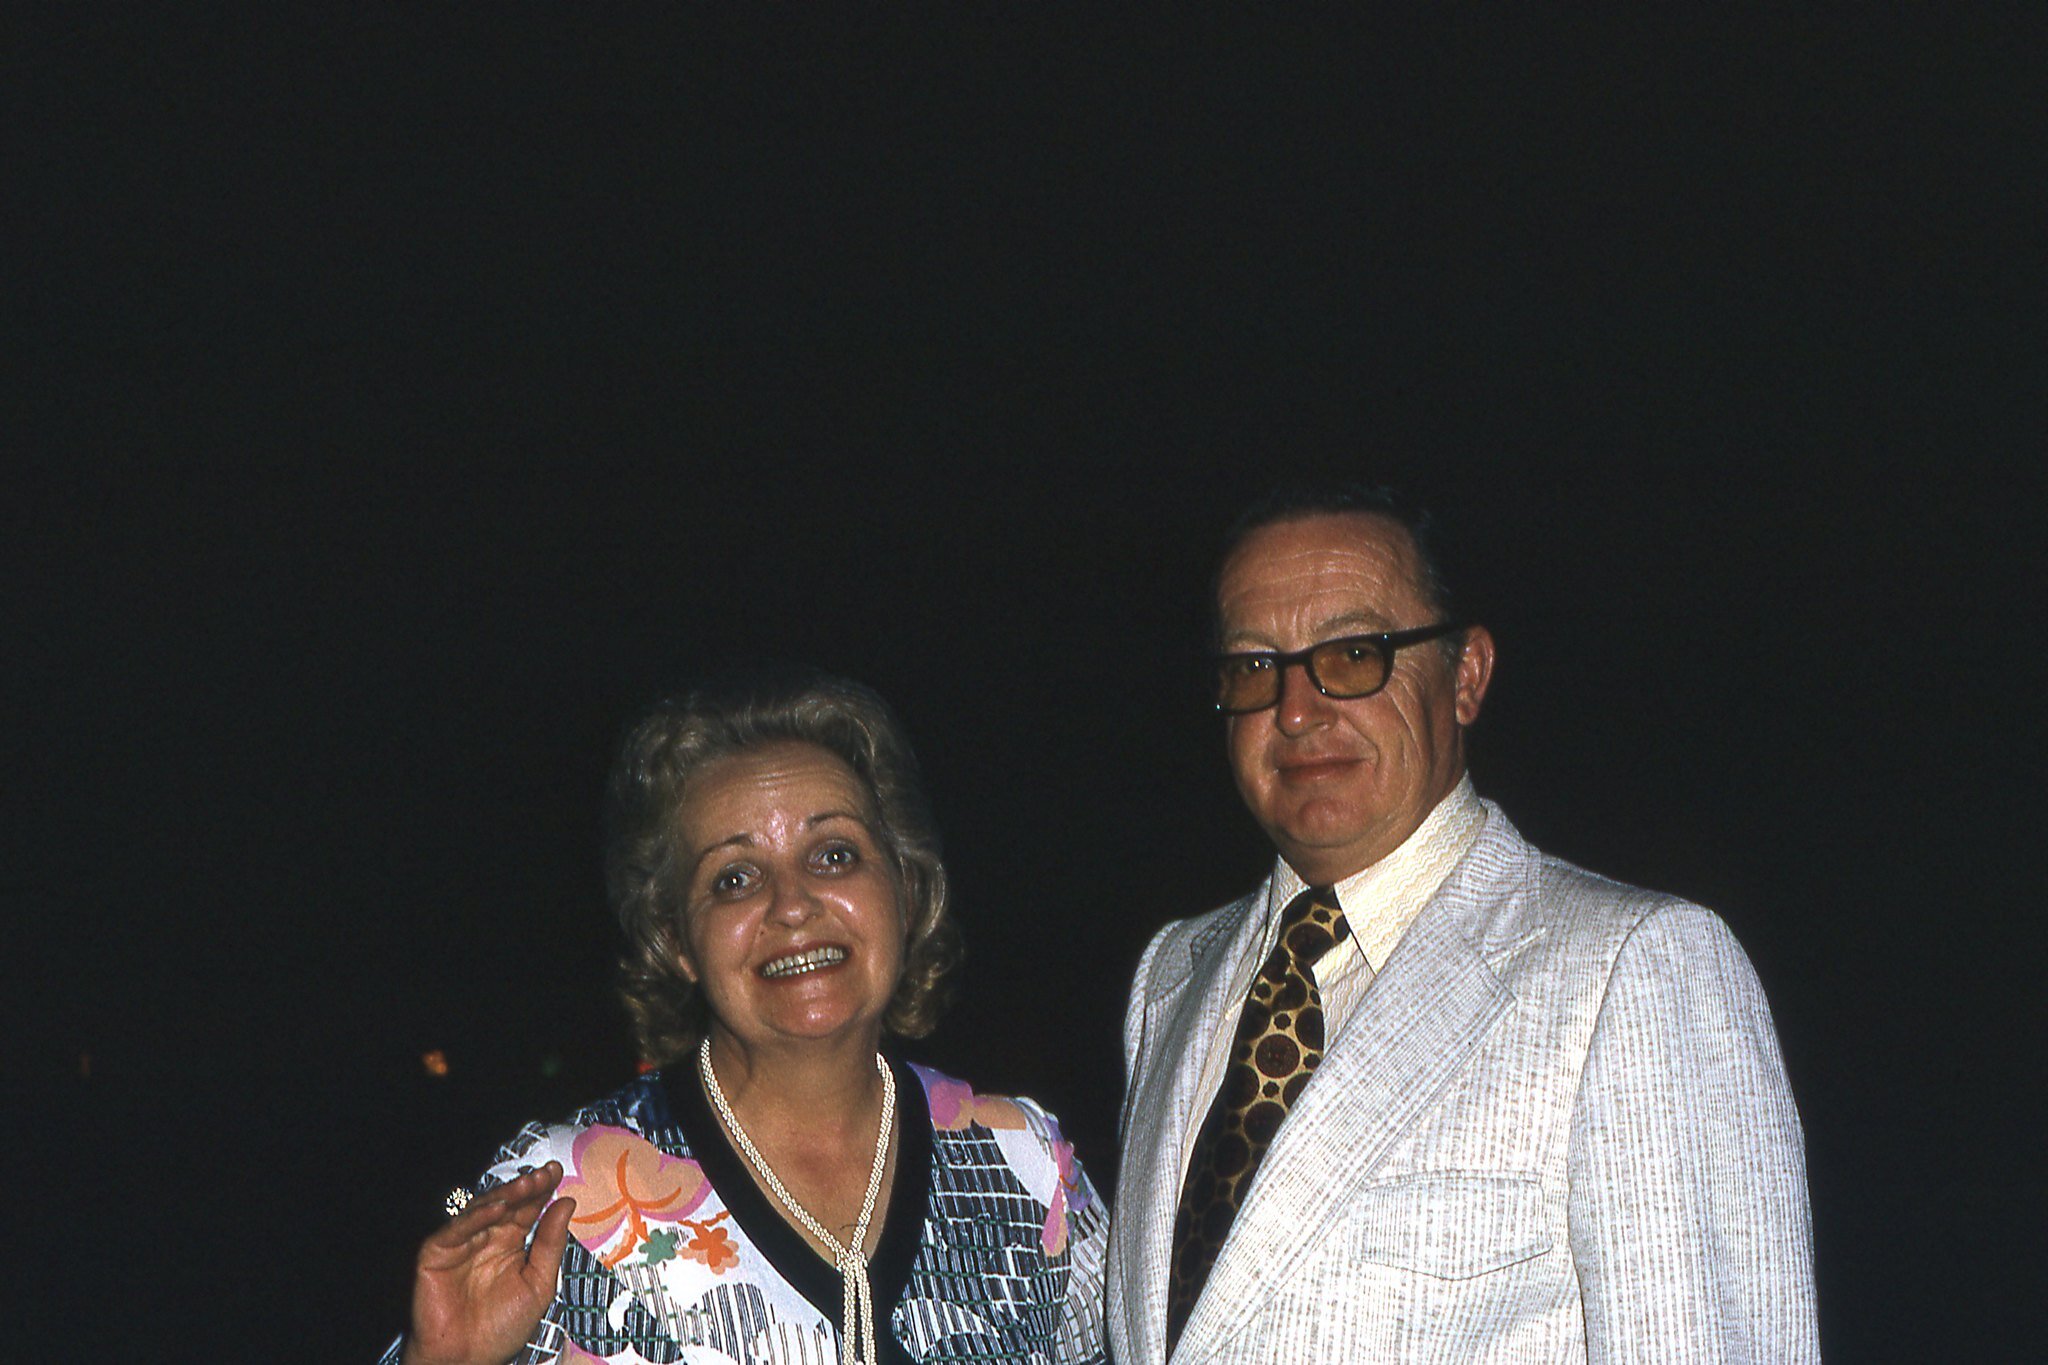 With husband (my grandfather) Michael John Hanley Jr. (1924-2015)